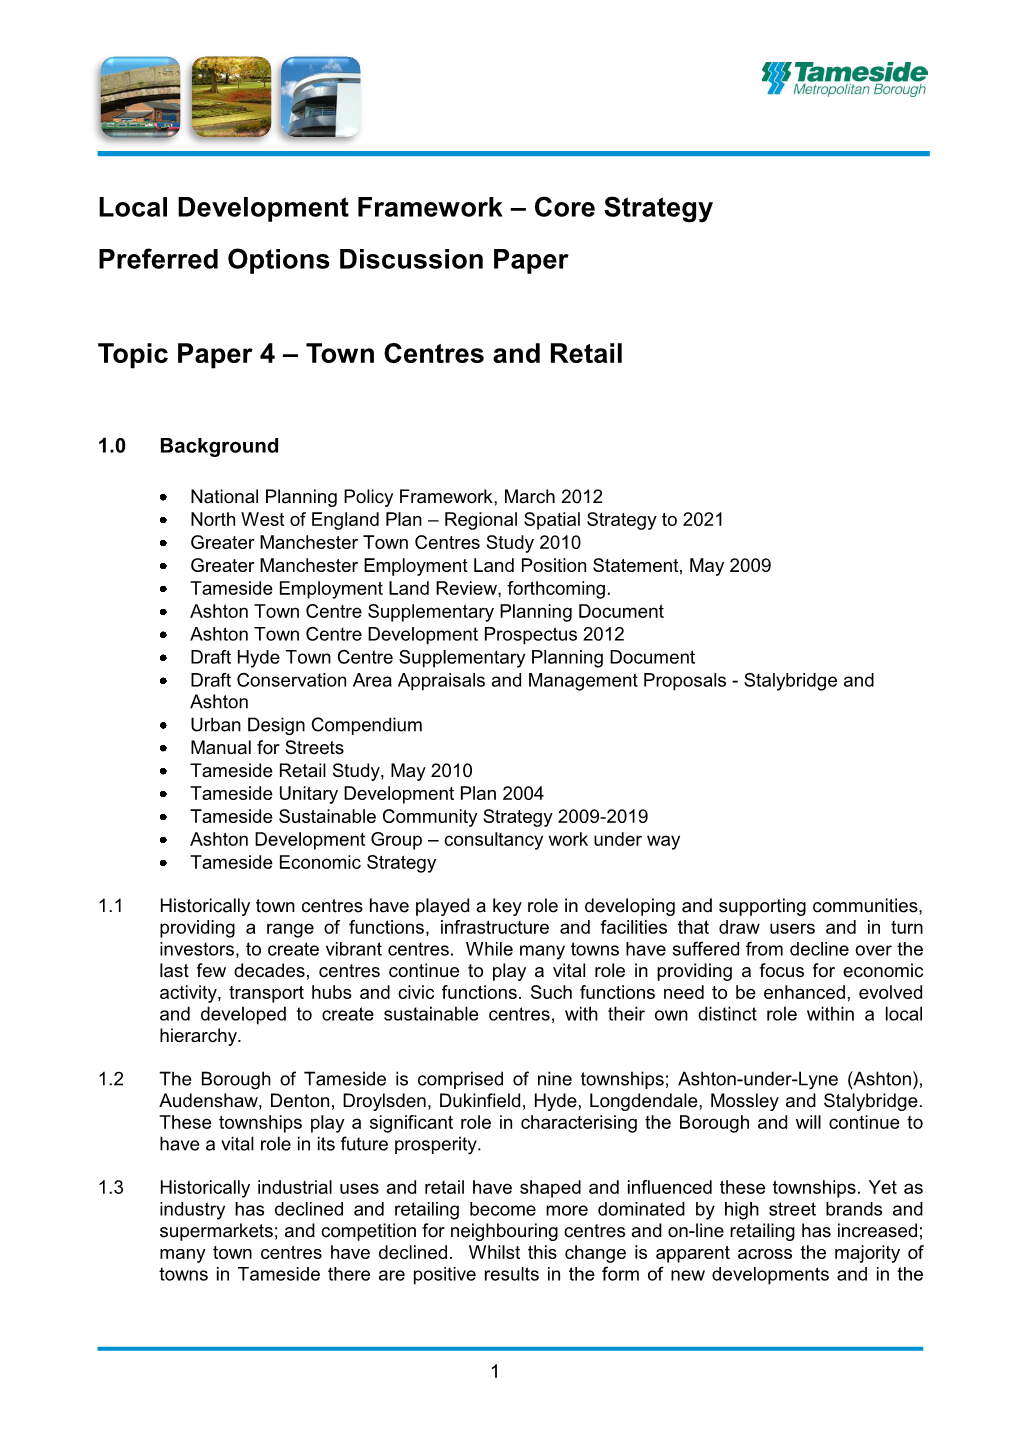 Local Development Framework – Core Strategy Preferred Options Discussion Paper